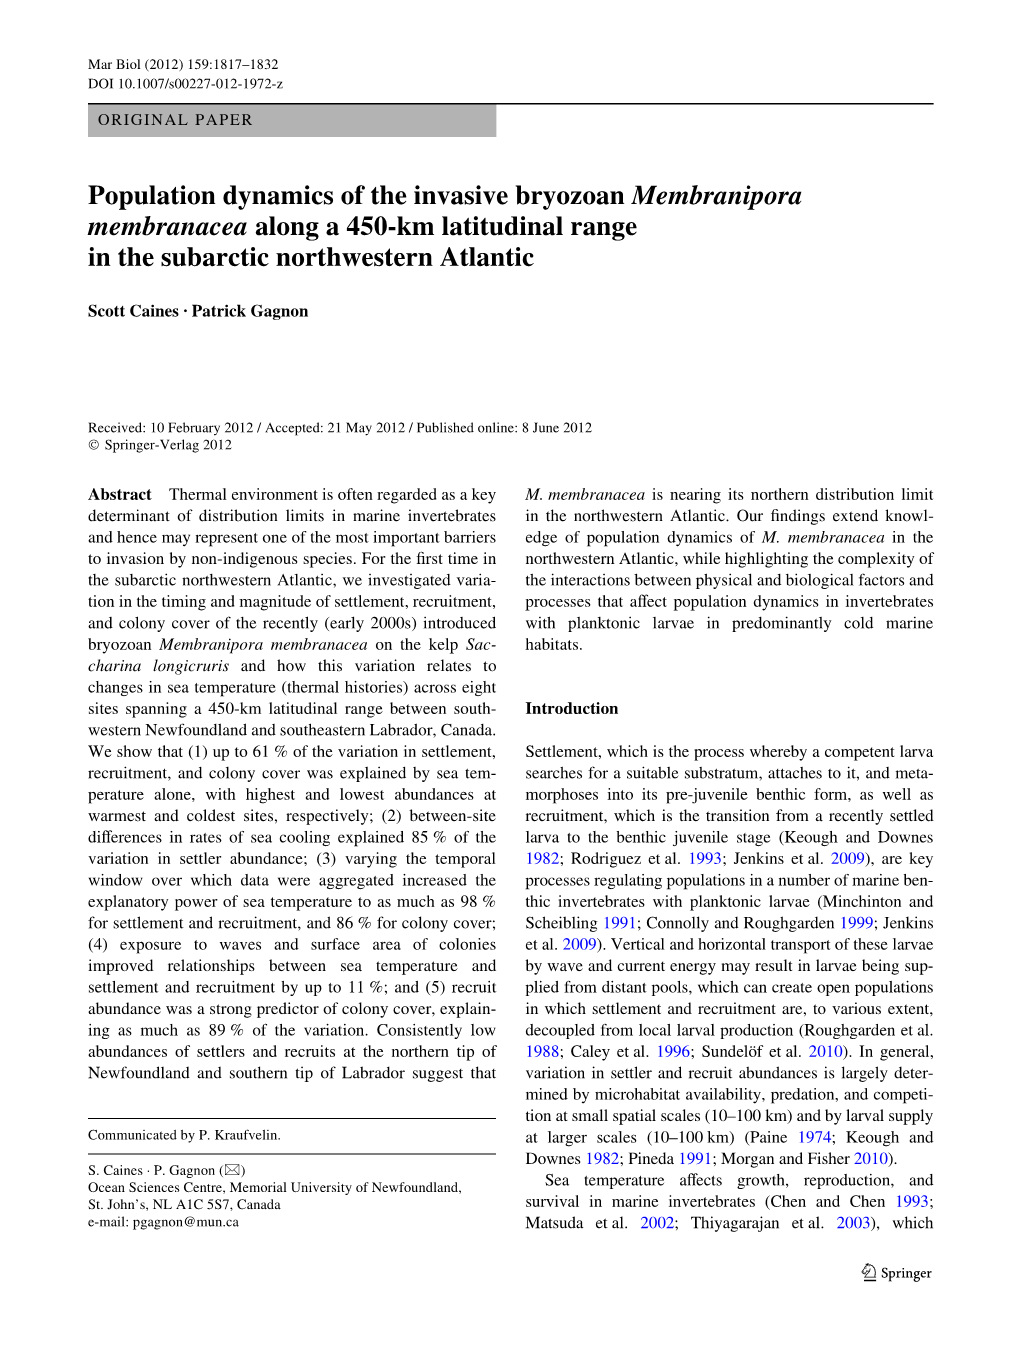 Population Dynamics of the Invasive Bryozoan Membranipora Membranacea Along a 450-Km Latitudinal Range in the Subarctic Northwestern Atlantic